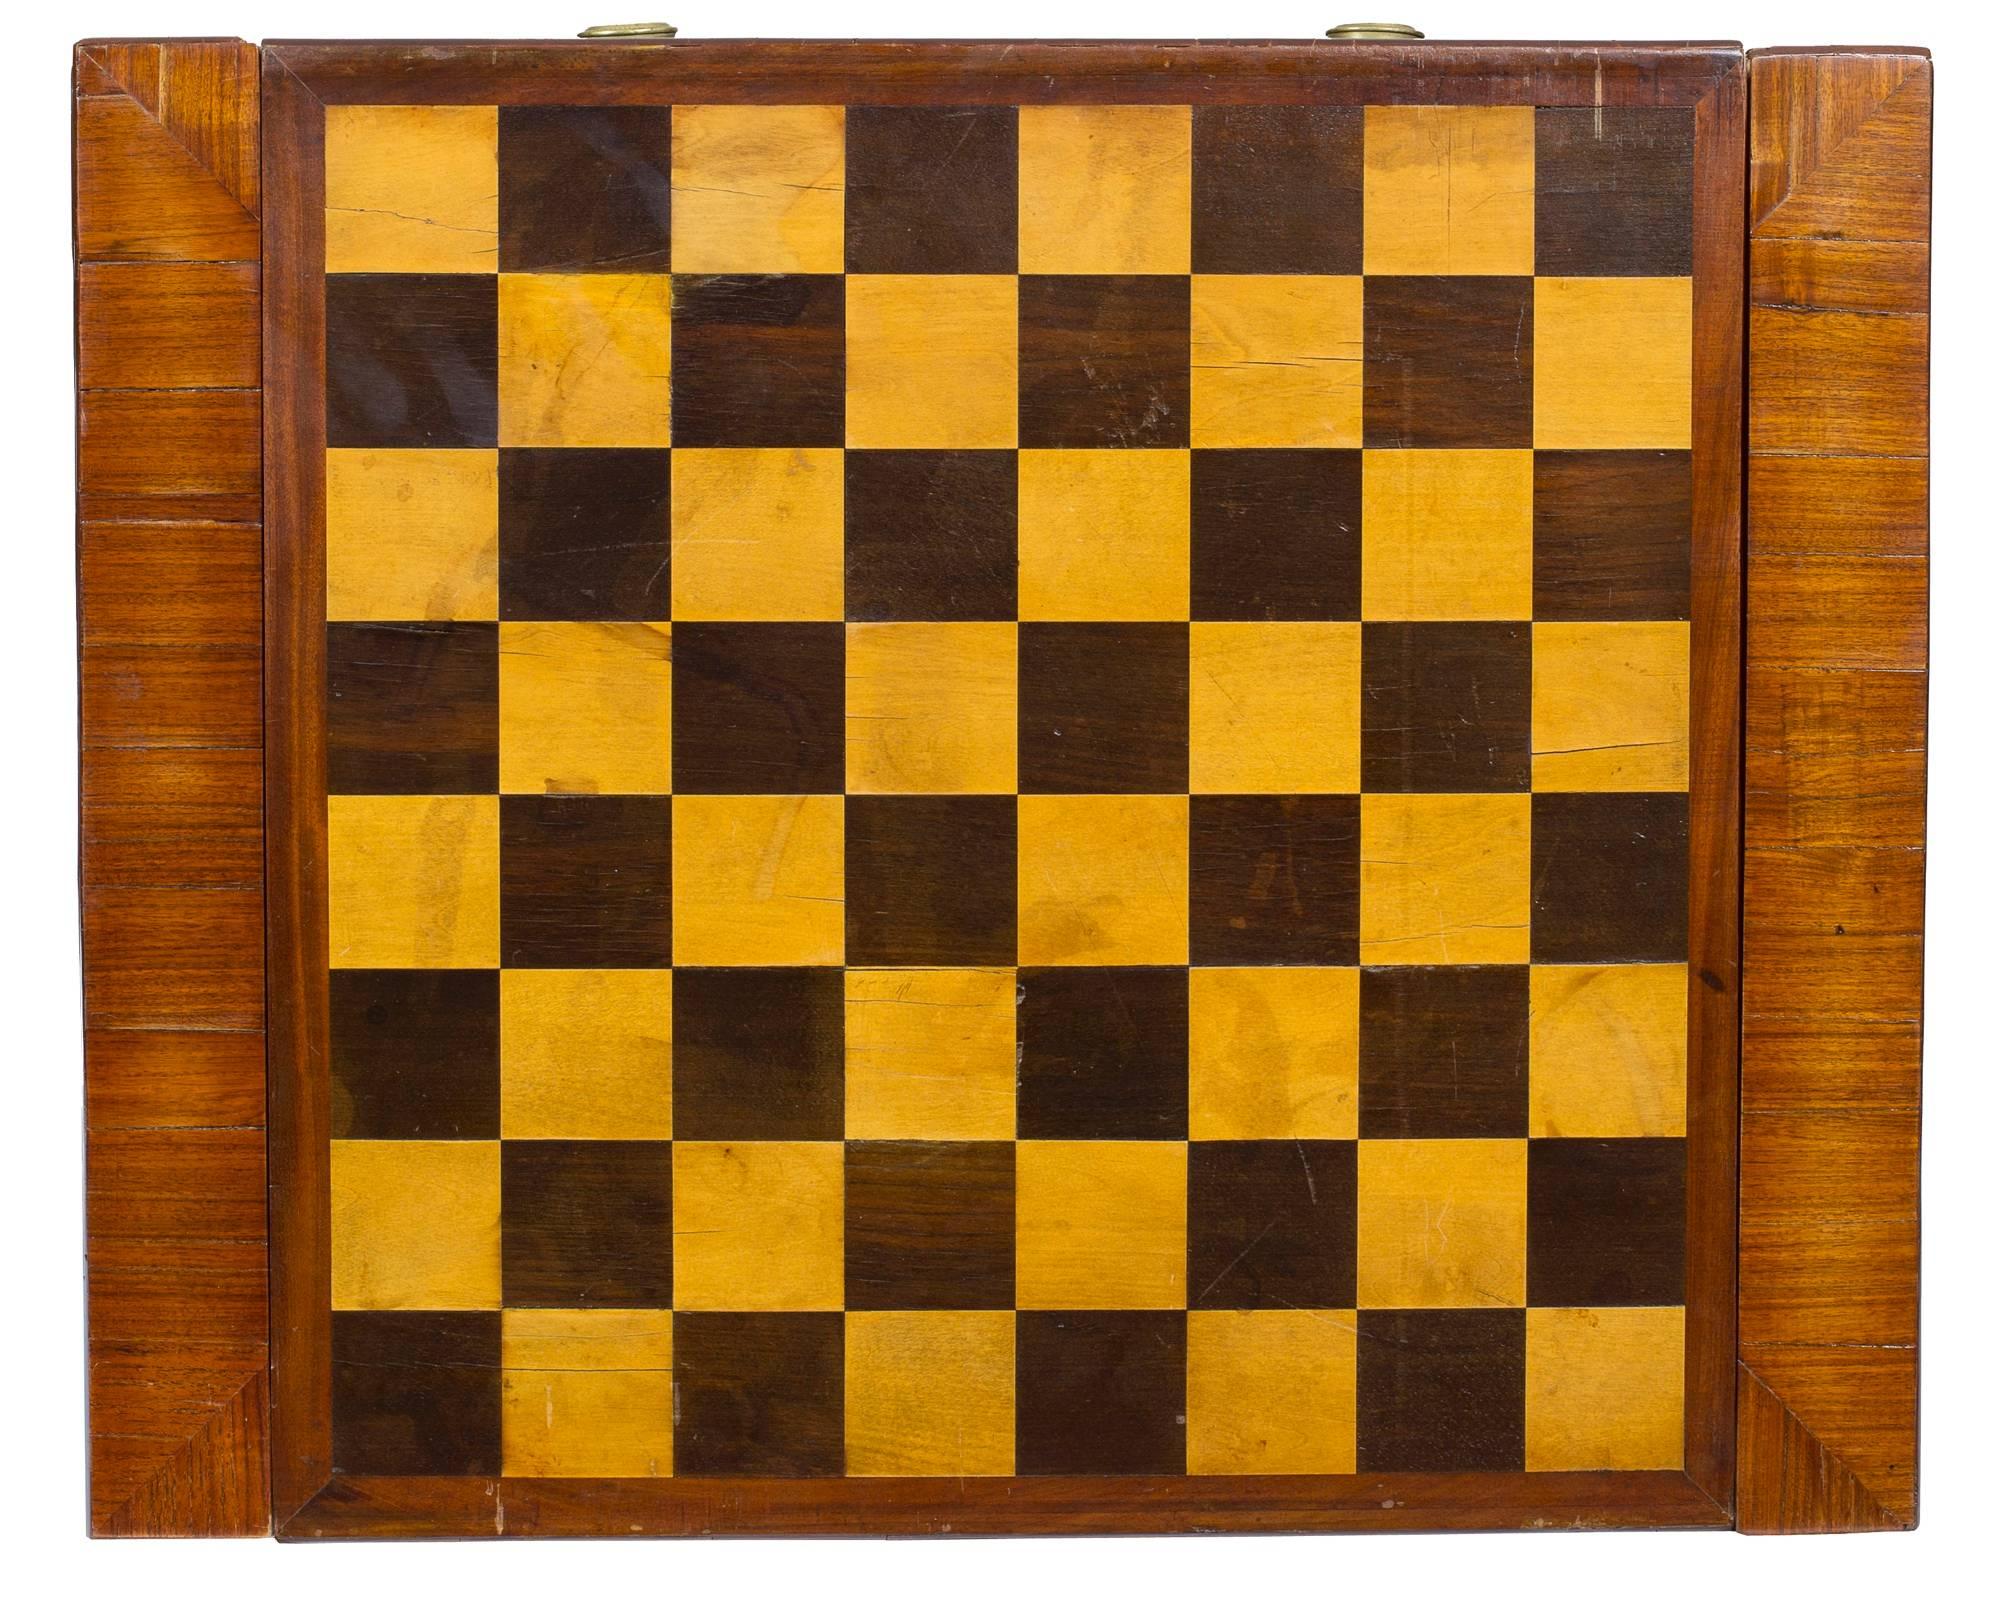 Federal/ Sheraton Mahogany Inlaid Games Table, New England, circa 1810 For Sale 2